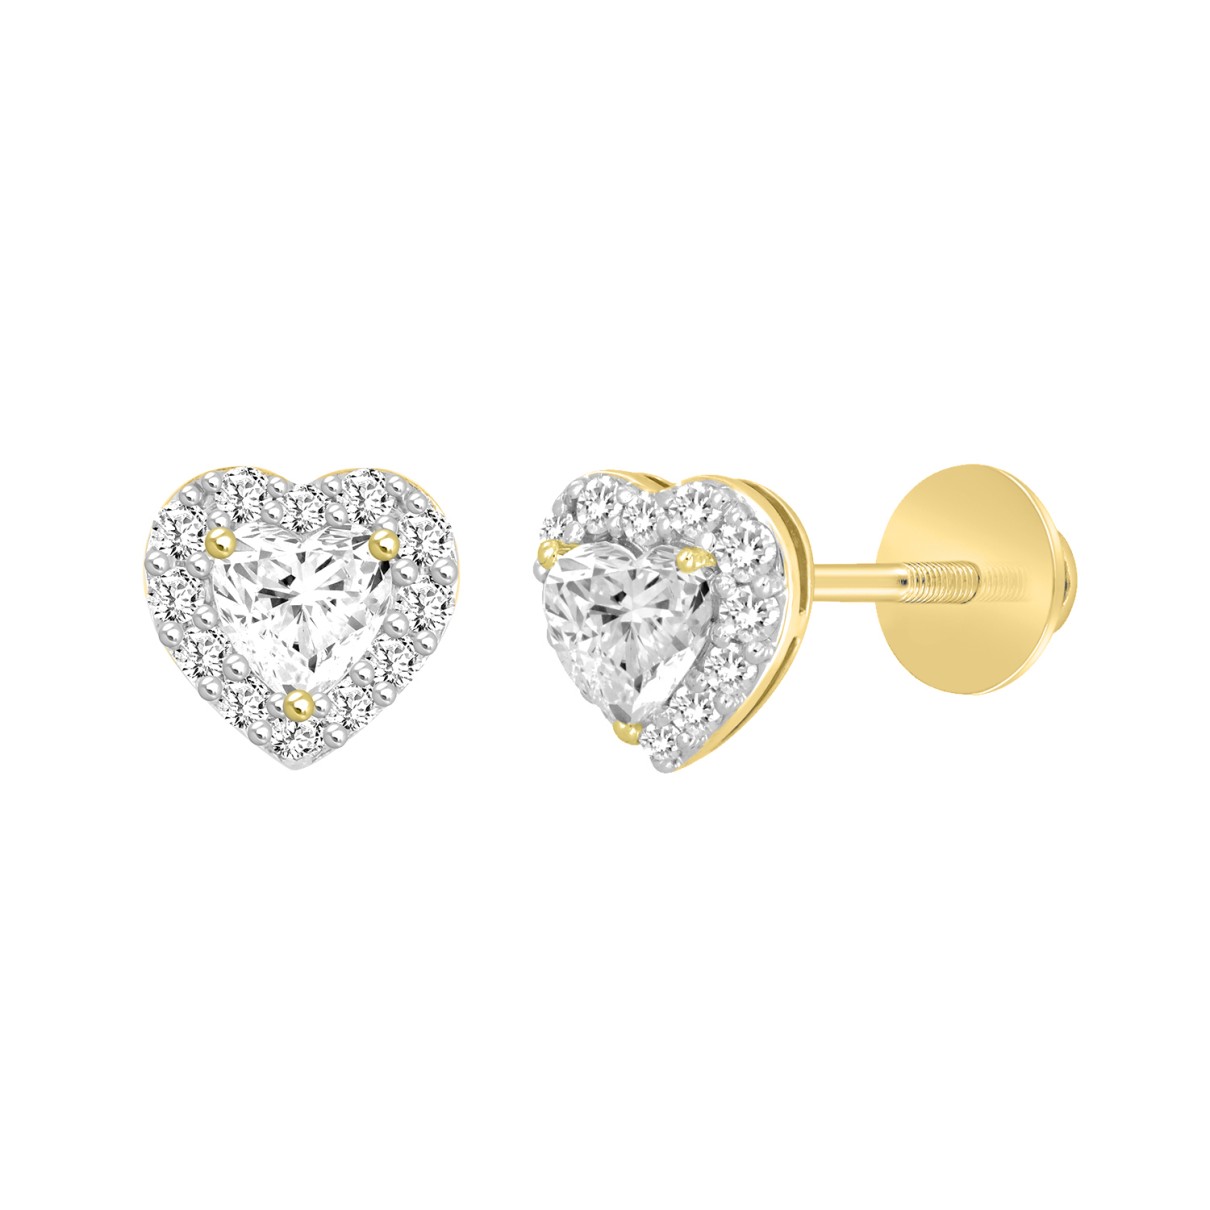 14K YELLOW GOLD1 3/8CT ROUND / HEART DIAMOND LADIES EARRINGS (CENTER STONE HEART DIAMOND 1CT )